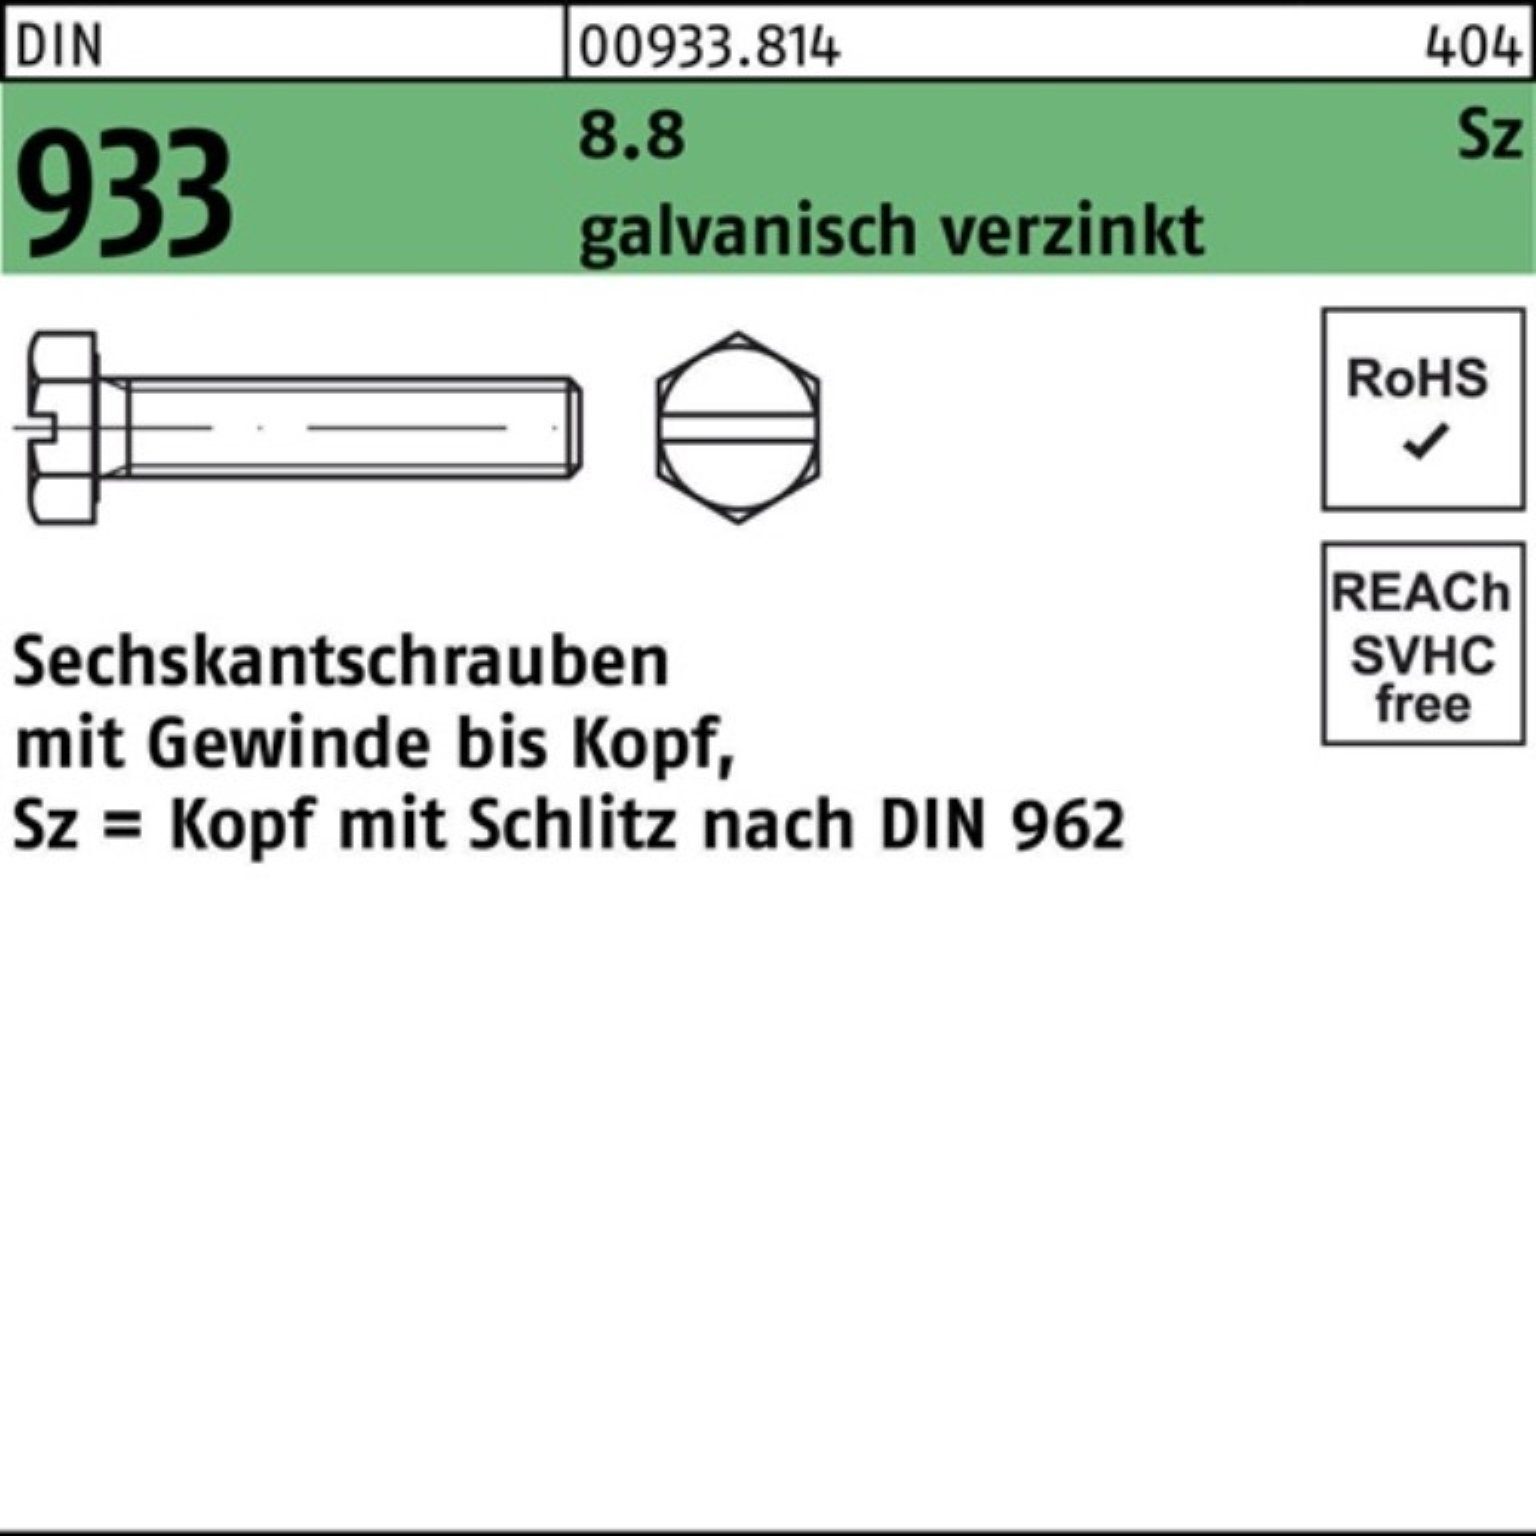 VG/Schlitz 16 Pack Sechskantschraube M8x Sechskantschraube Reyher 8.8 DIN 200er galv.verz. 933